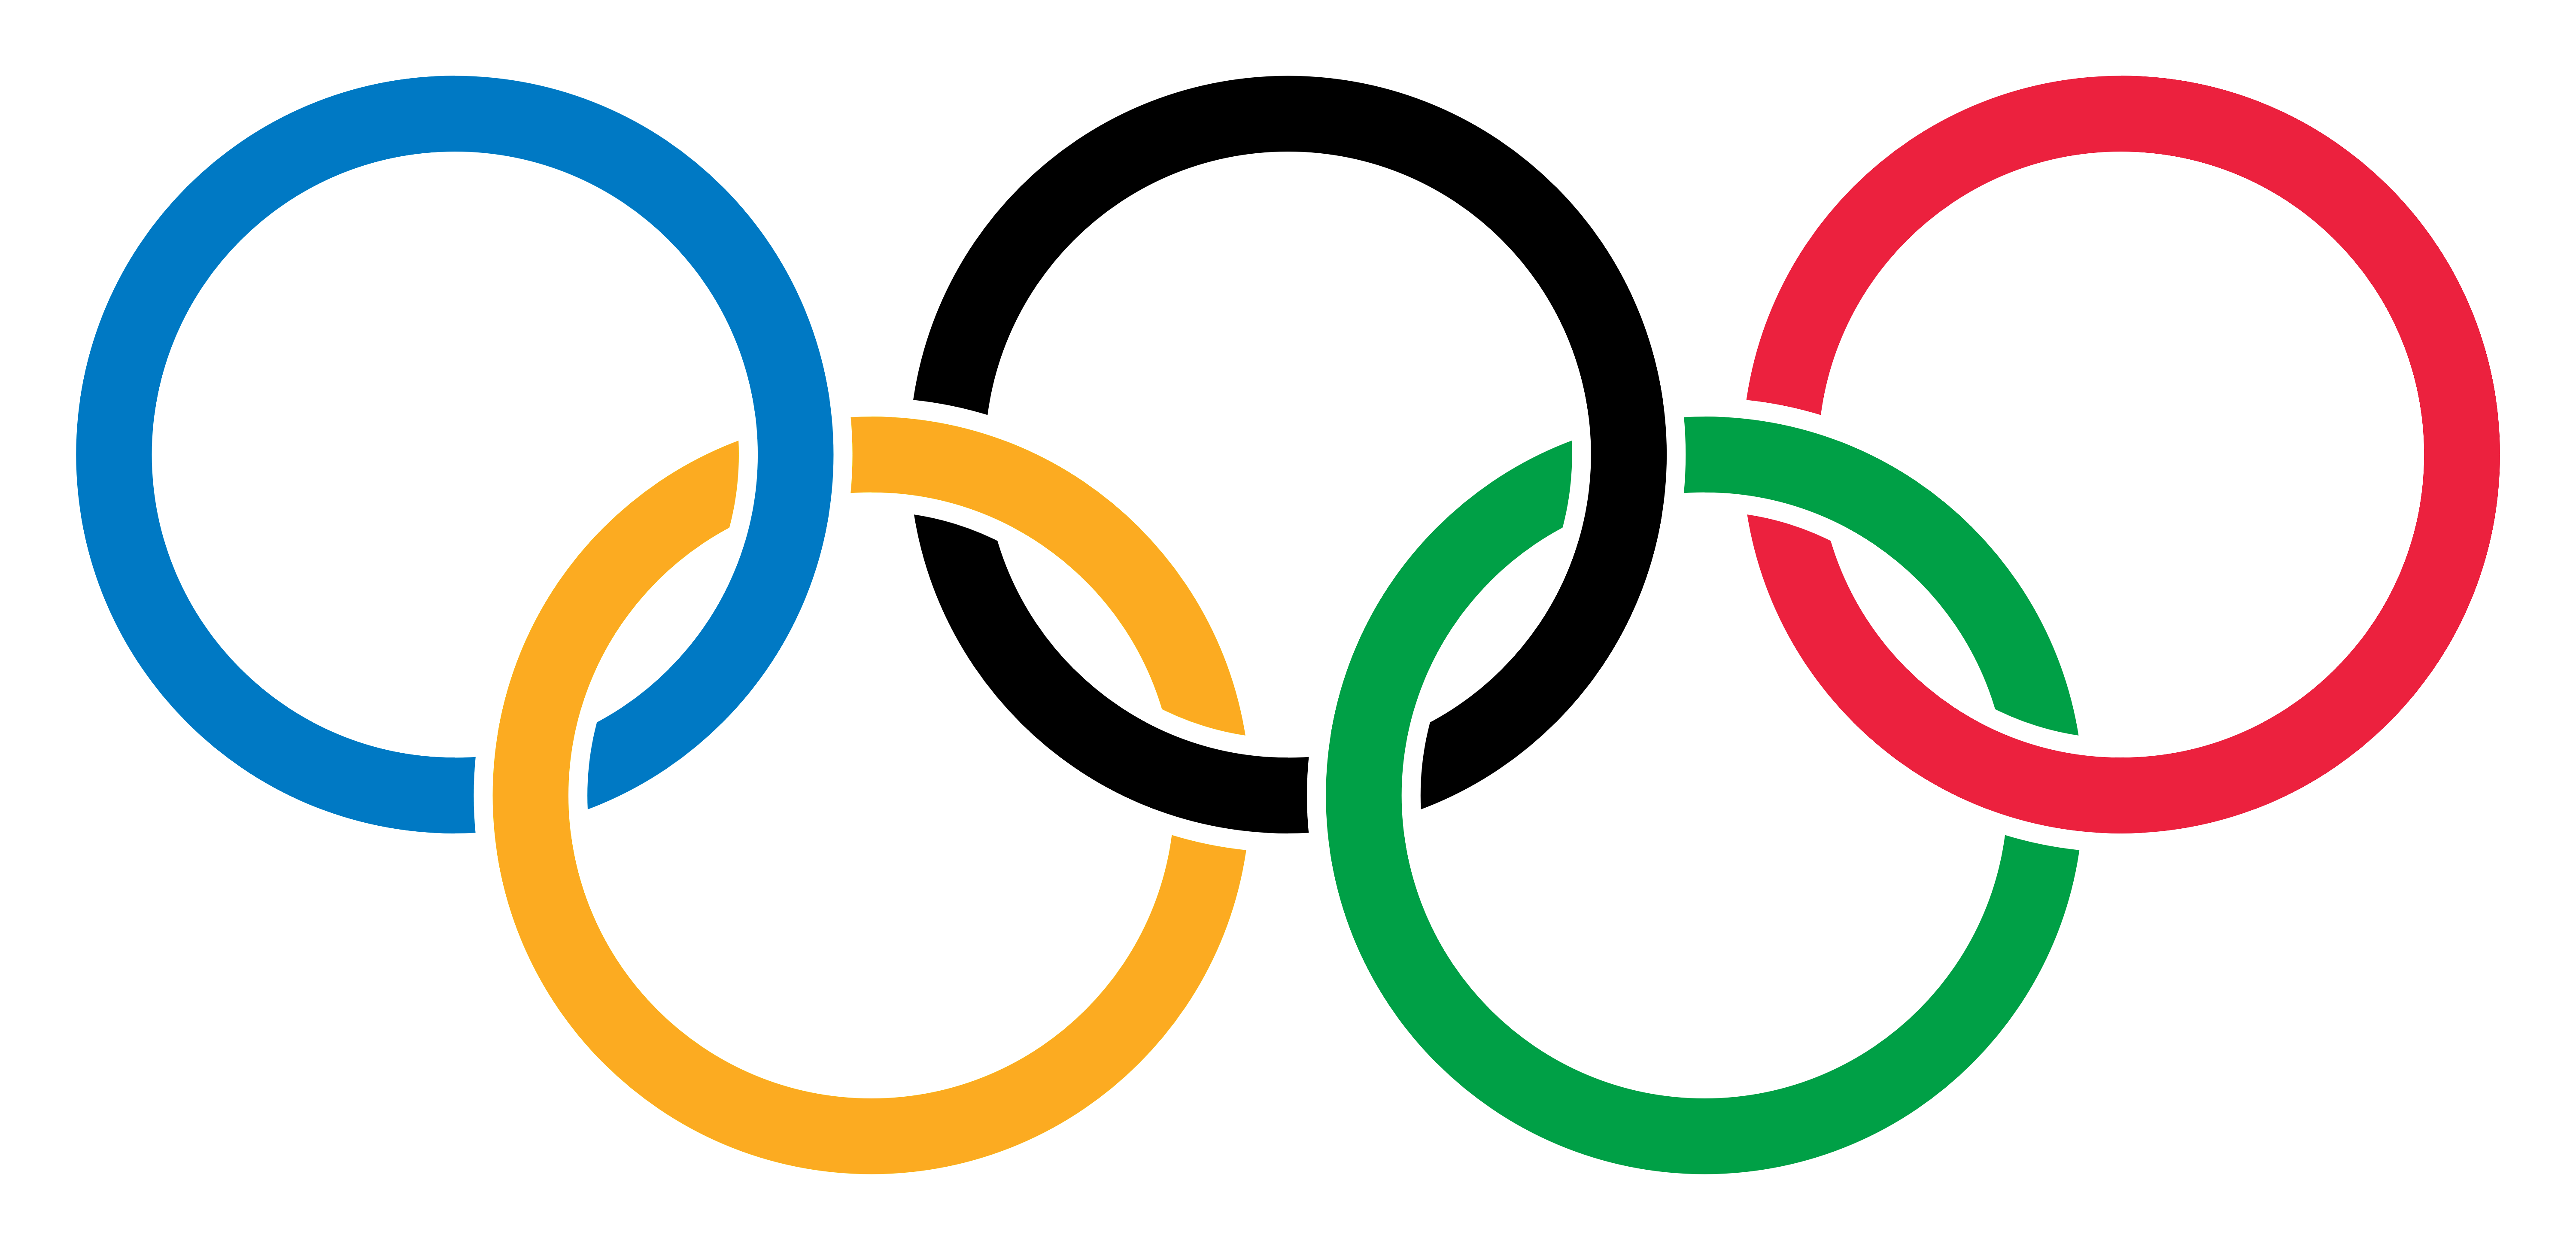 Olympic rings Logos Download